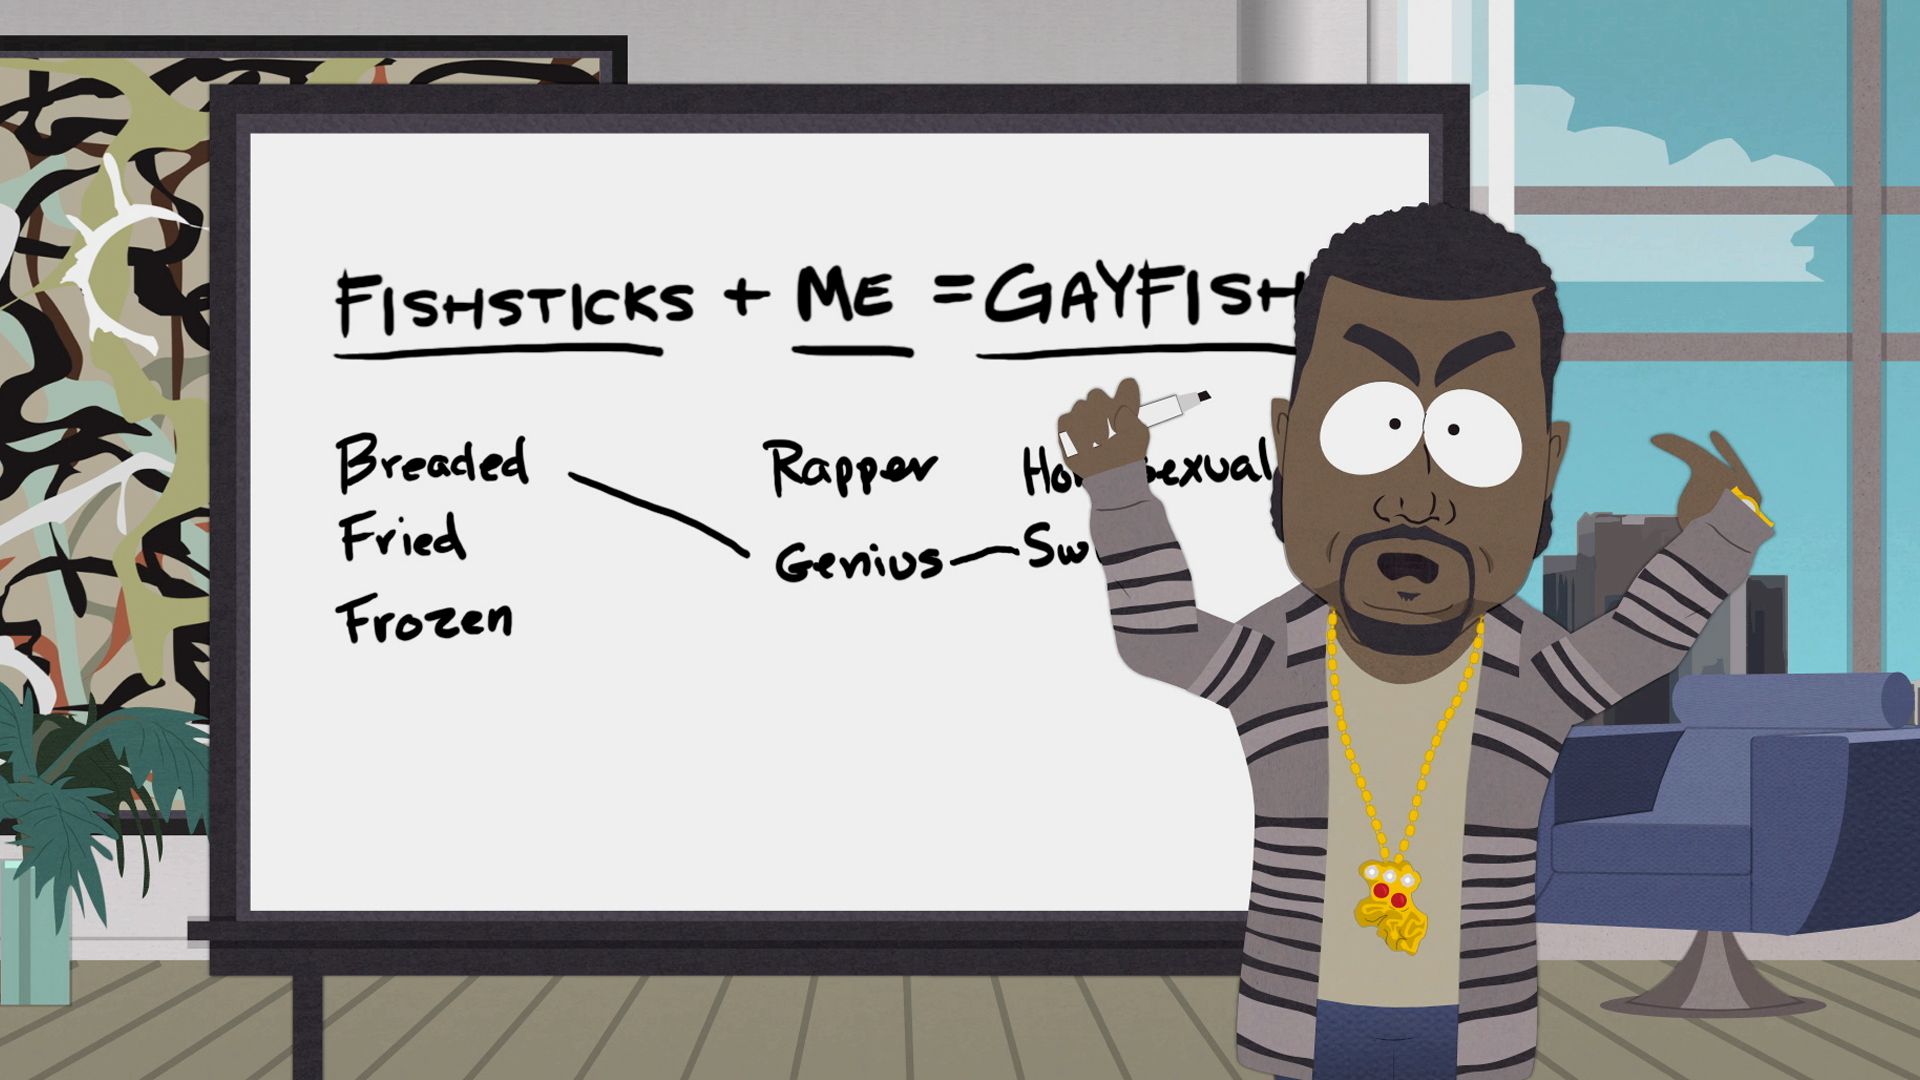 Kanye west gay fish